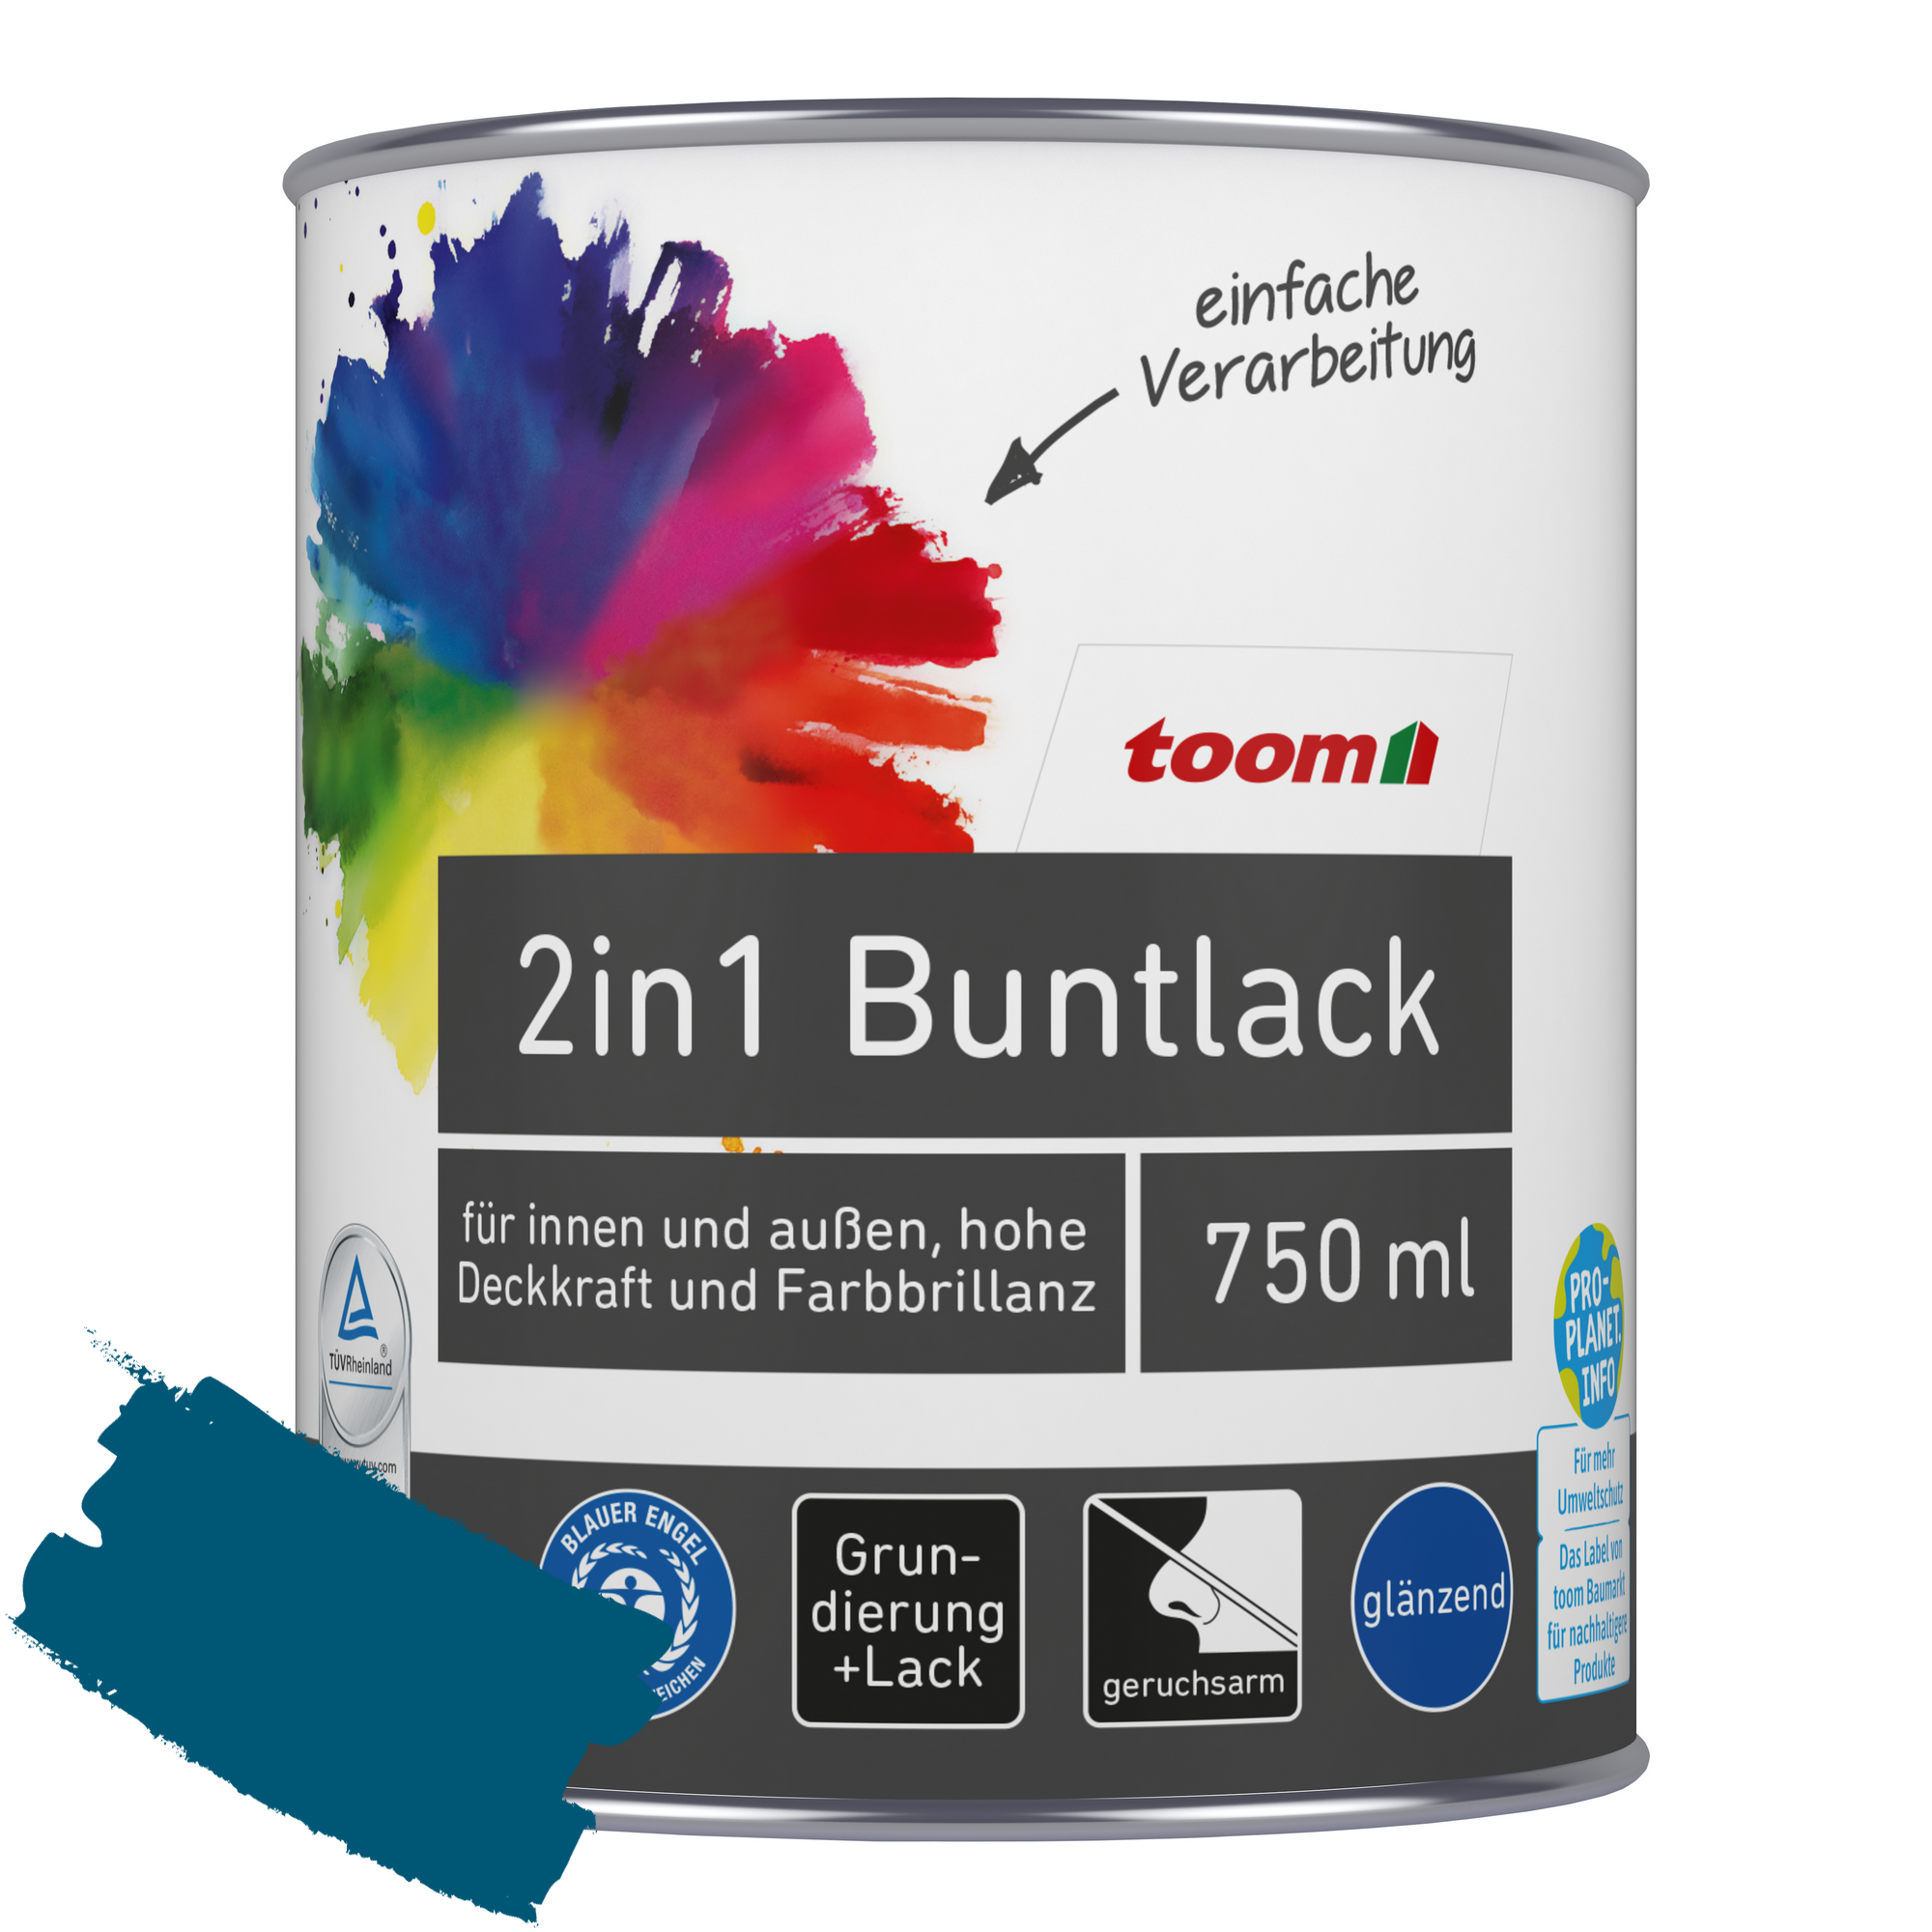 2in1 Buntlack 'Blaupause' enzianblau glänzend 750 ml + product picture